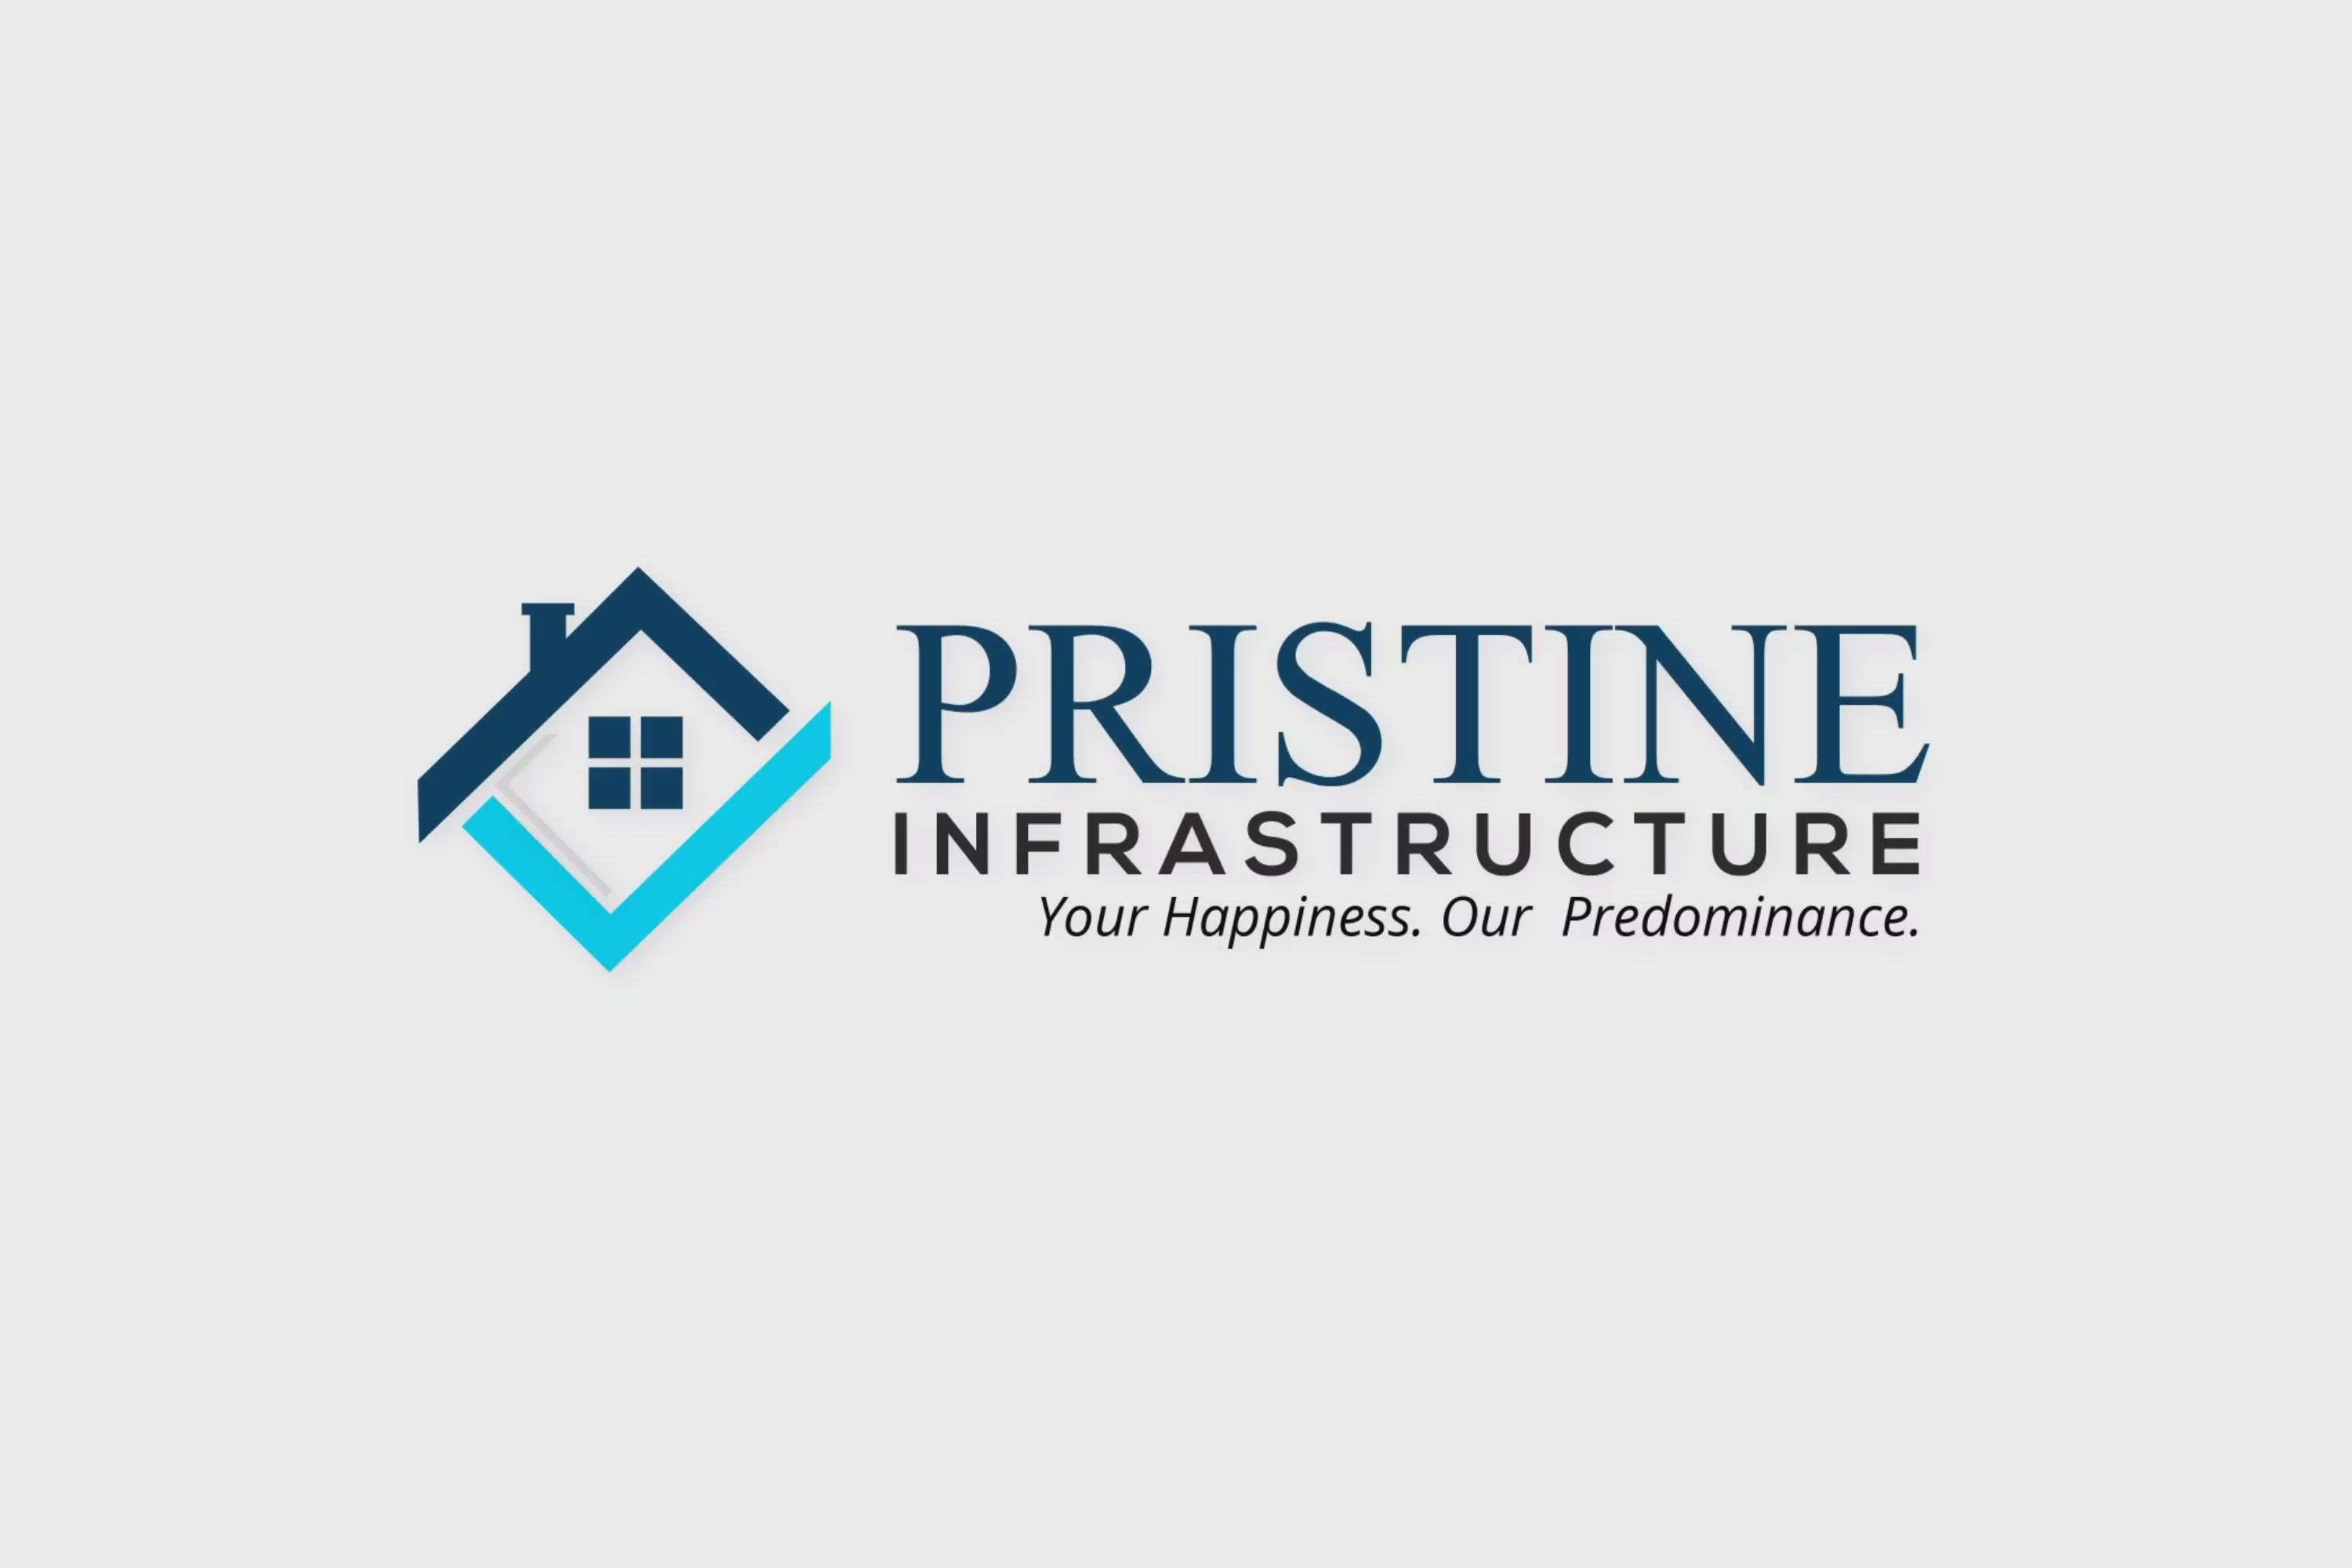 Contact Us: +919645456712
Website: www.pristineinfrastructure.com
#HouseConstruction #InteriorDesigner #Architectural&Interior #FloorPlans #HouseRenovation #budgetinteriors #budgethomeplan